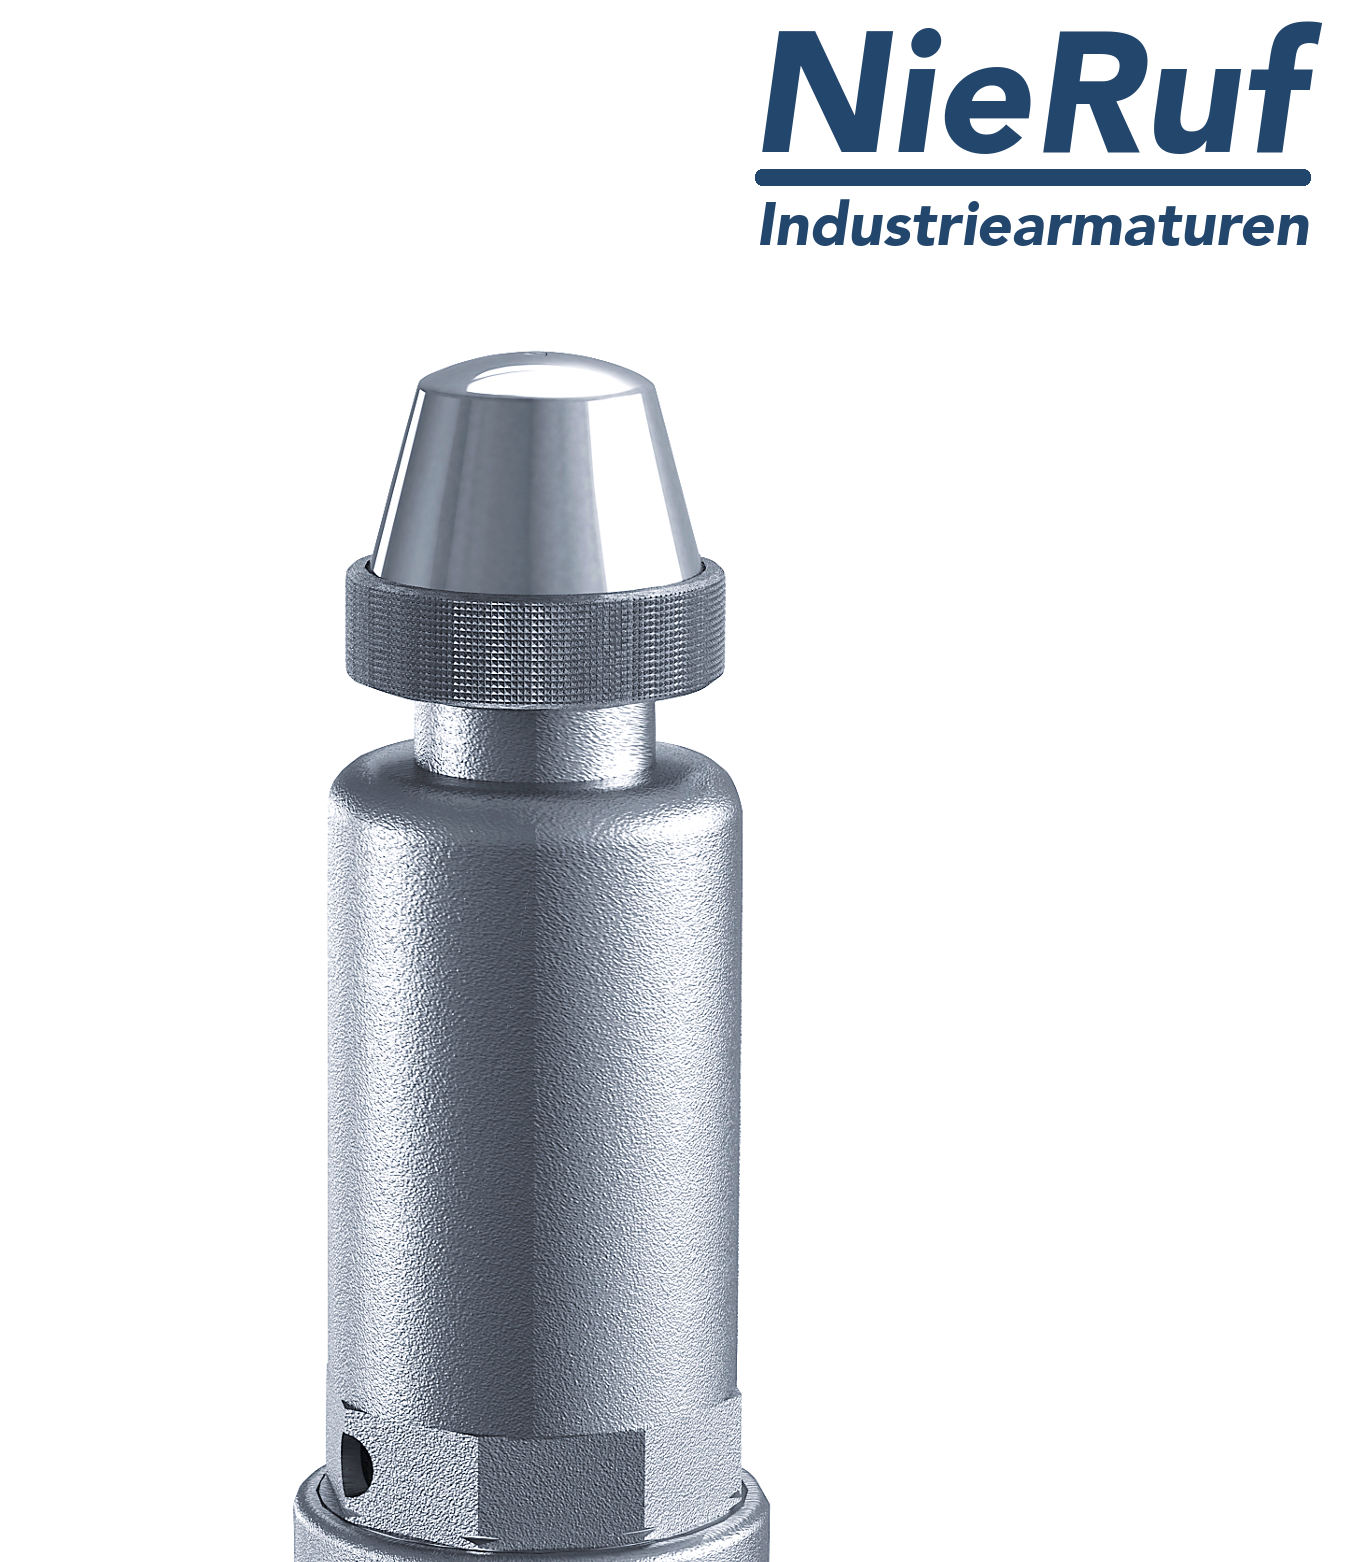 safety valve 2" x 2" fm SV06 liquid media, stainless steel NBR